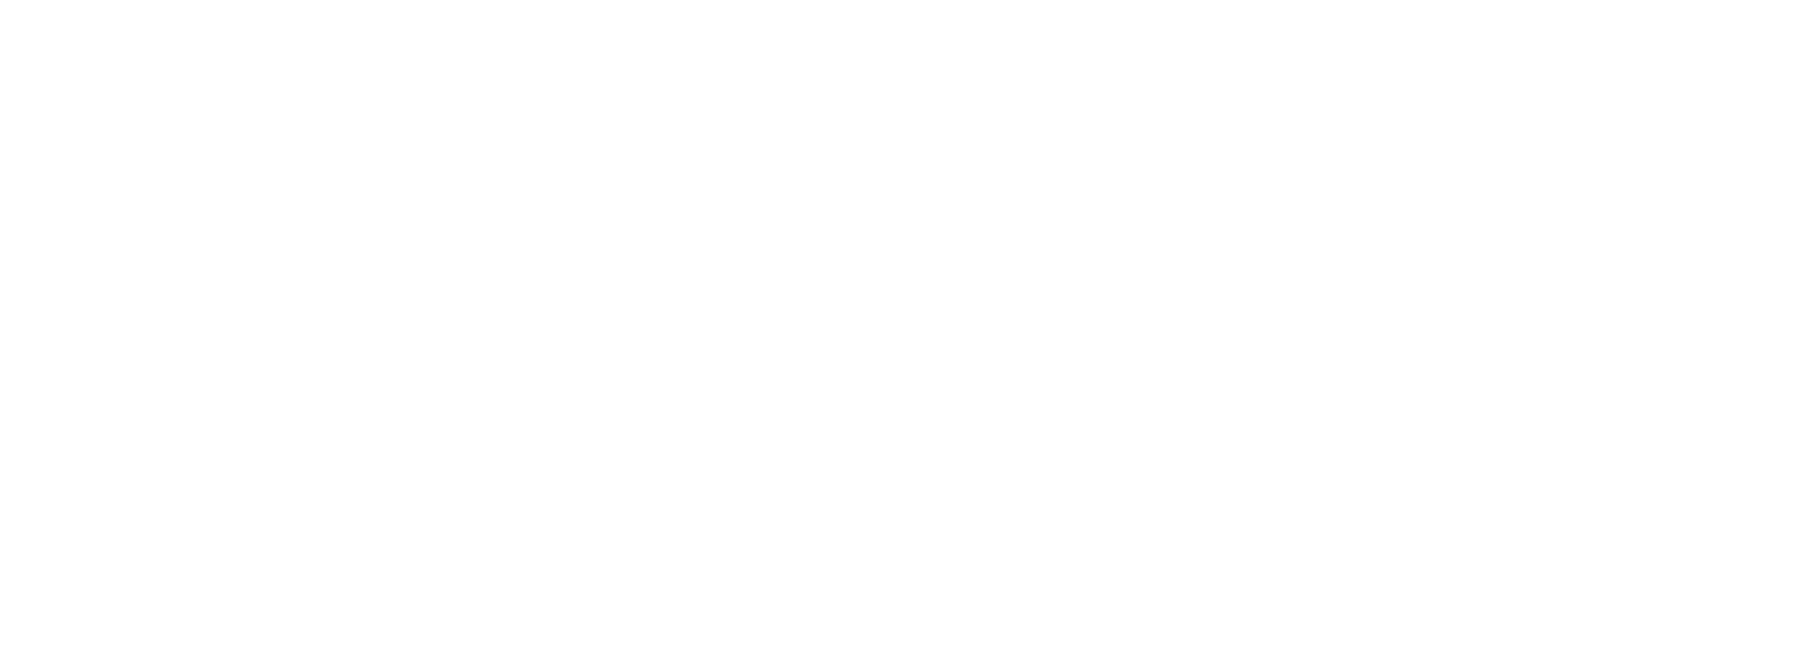 Infinite Family